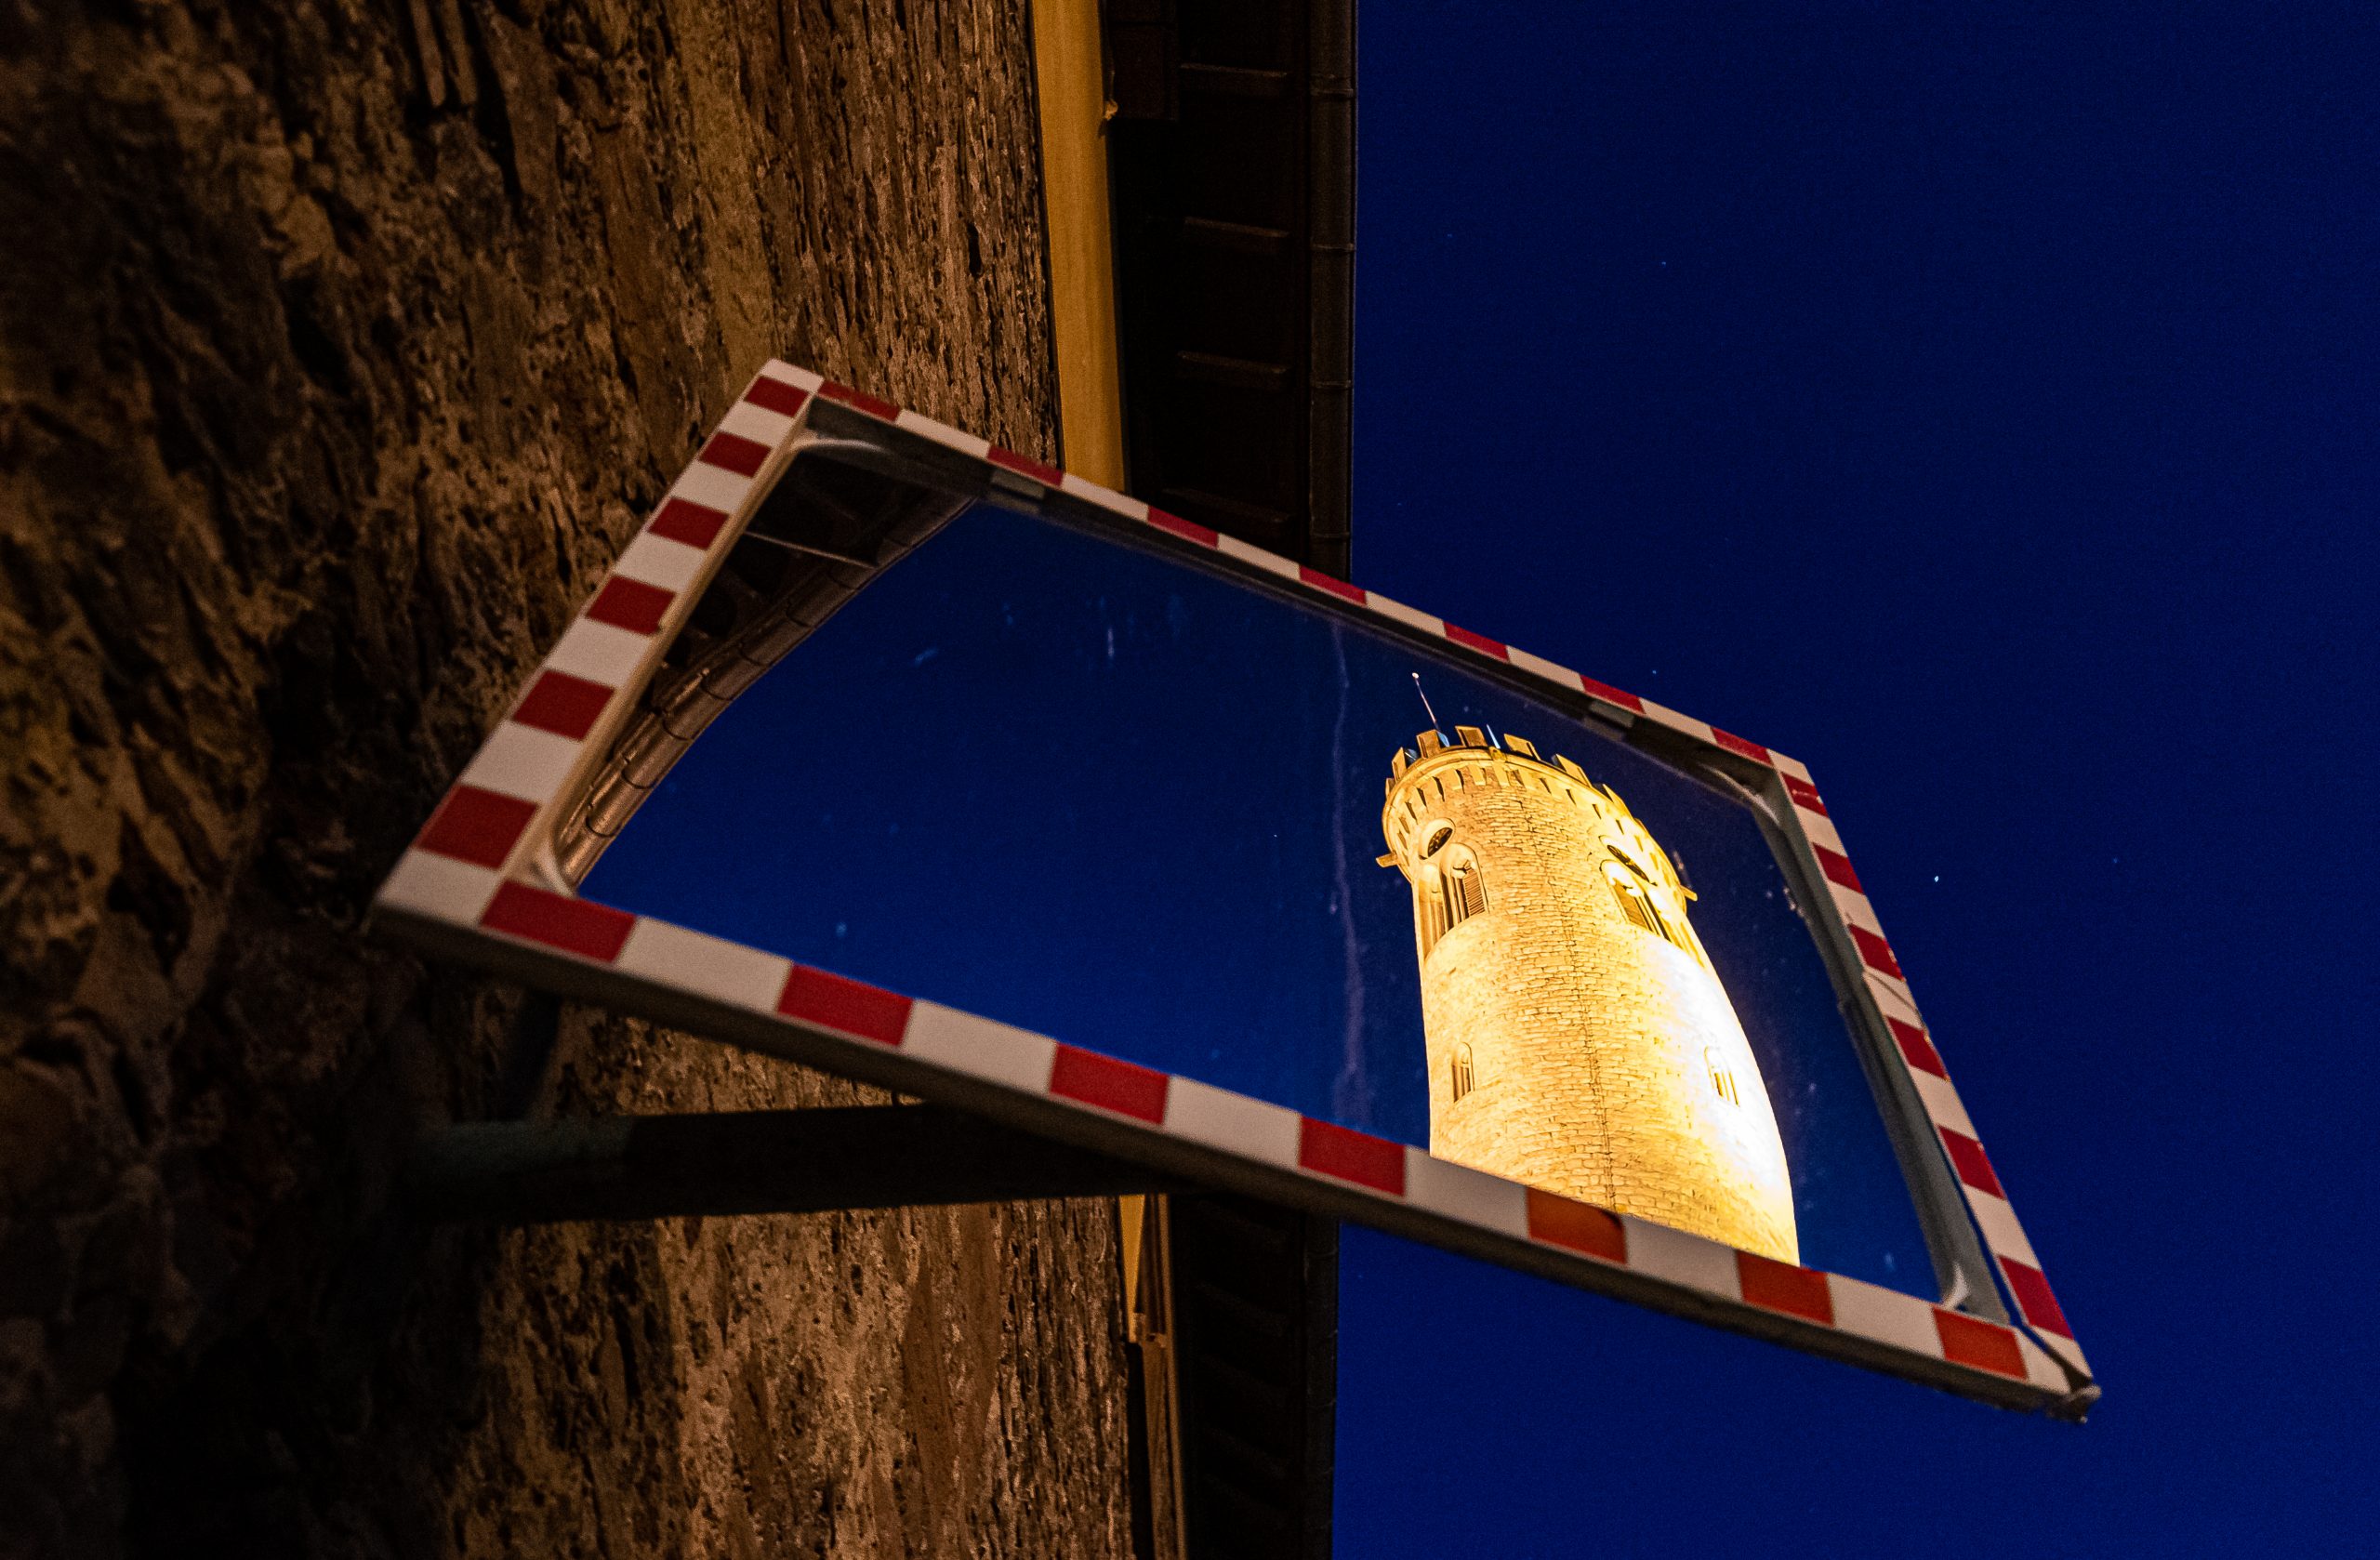 Uhrturm Oppenheim im Spiegel. (Foto: Andreas Lerg)